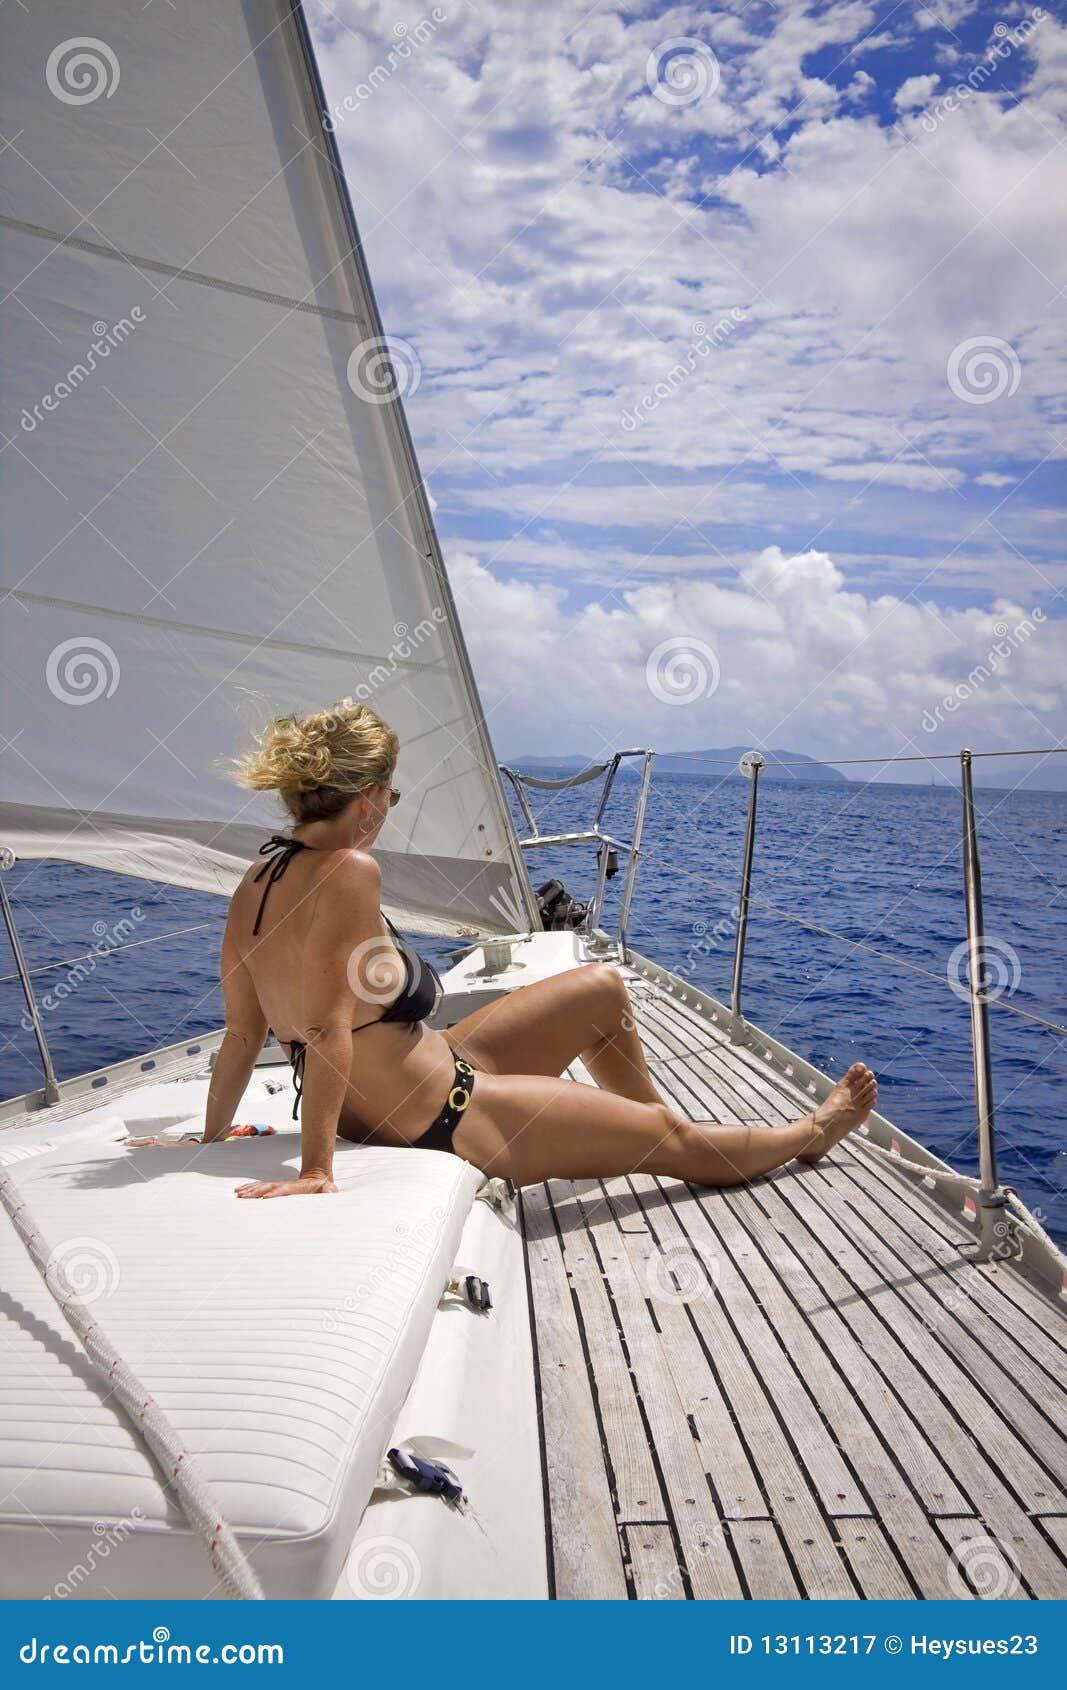 sailing in the tropics